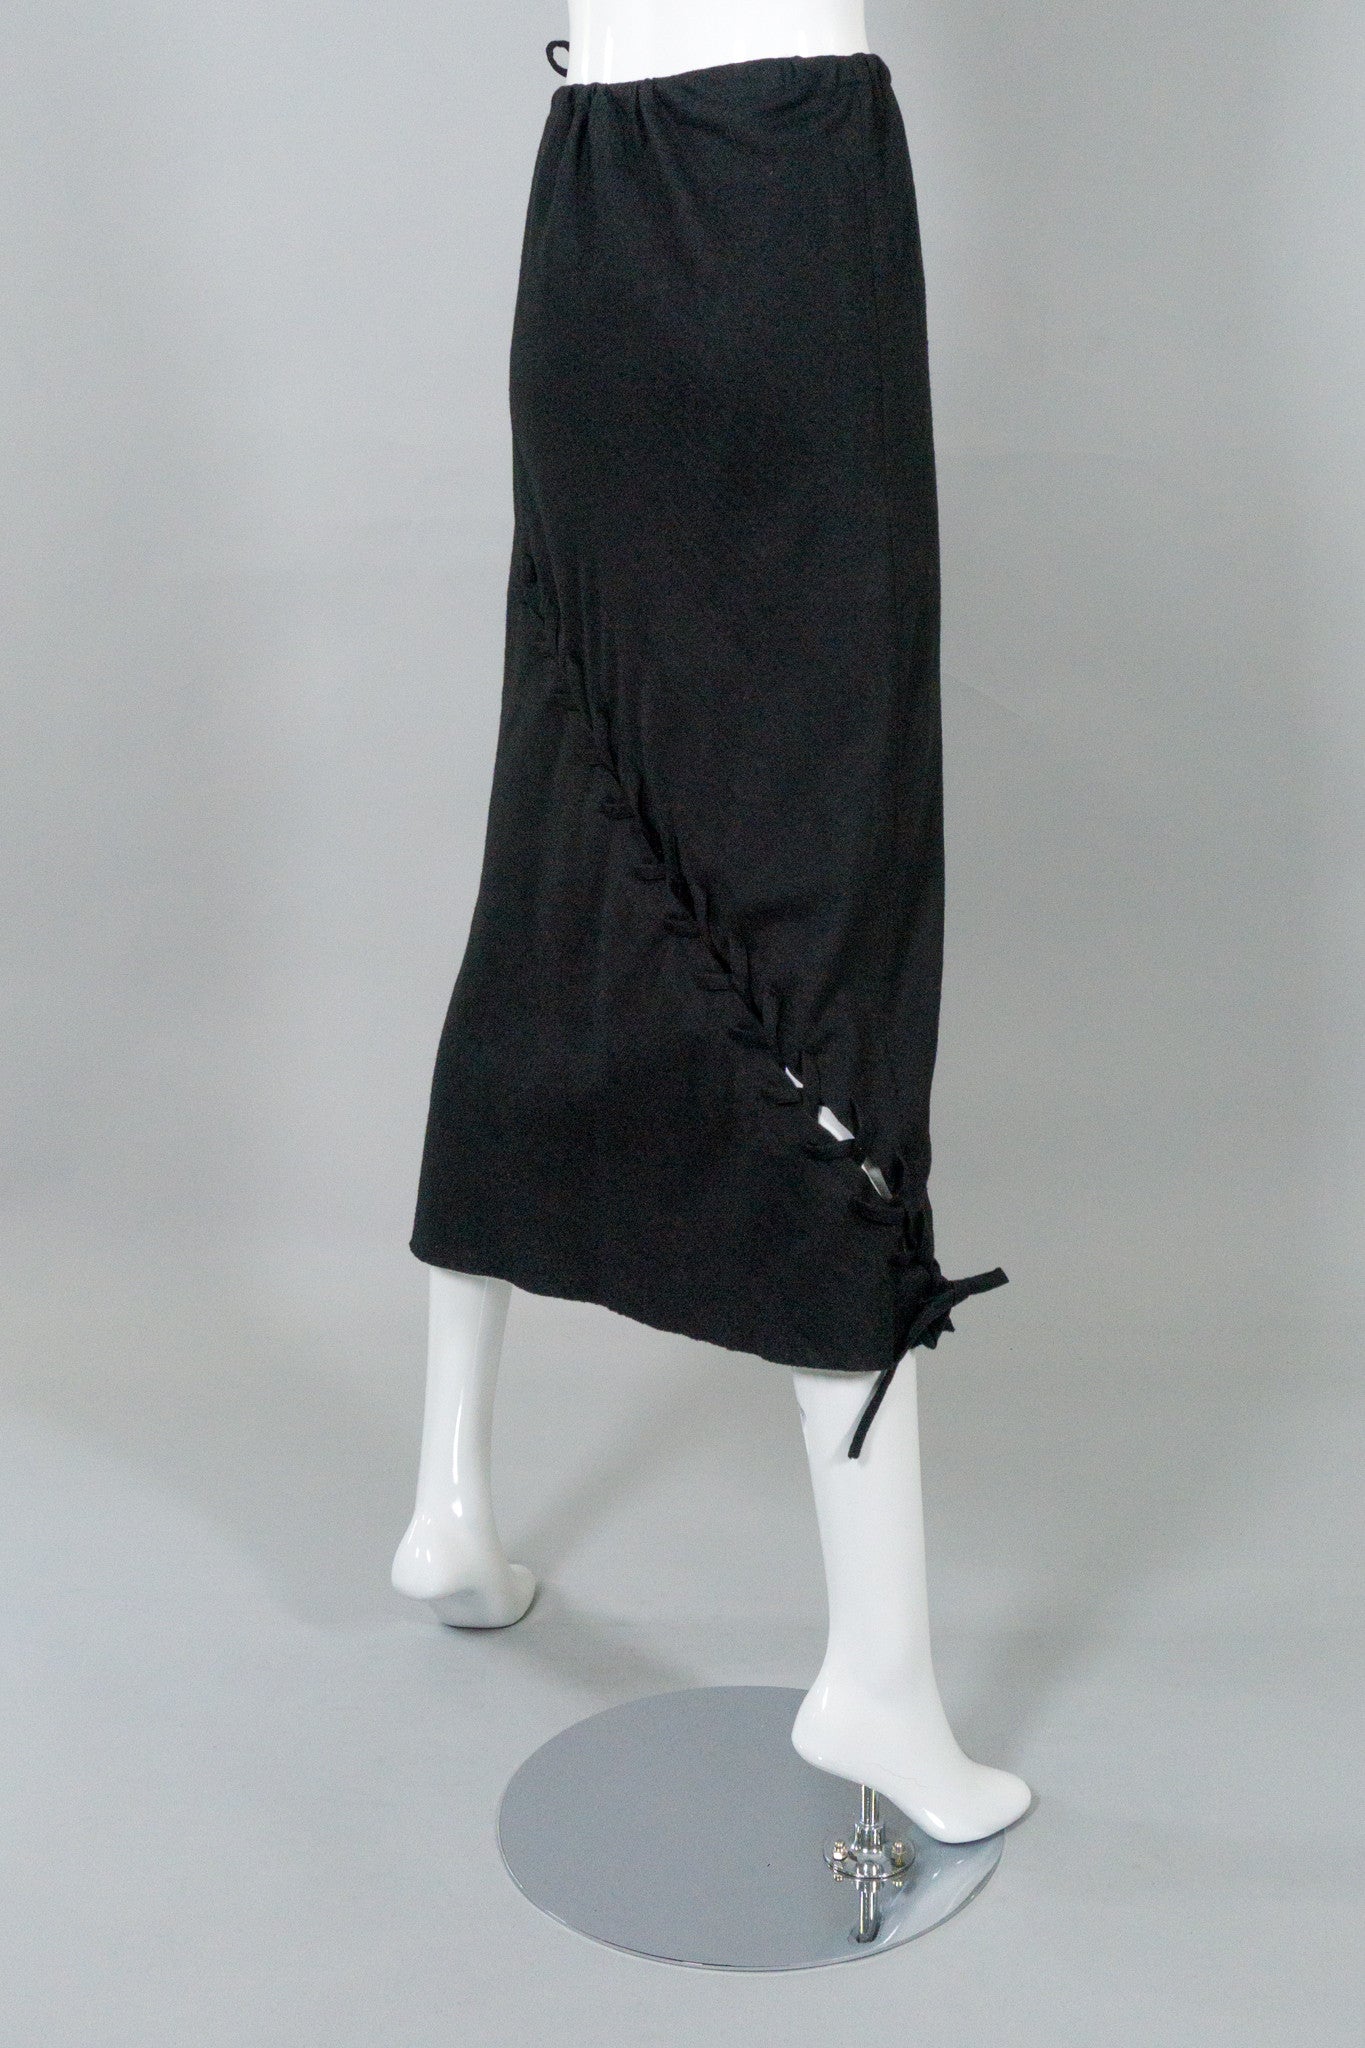 Ann Demeulemeester Vintage Wool Bias Cut Lace-Up Skirt